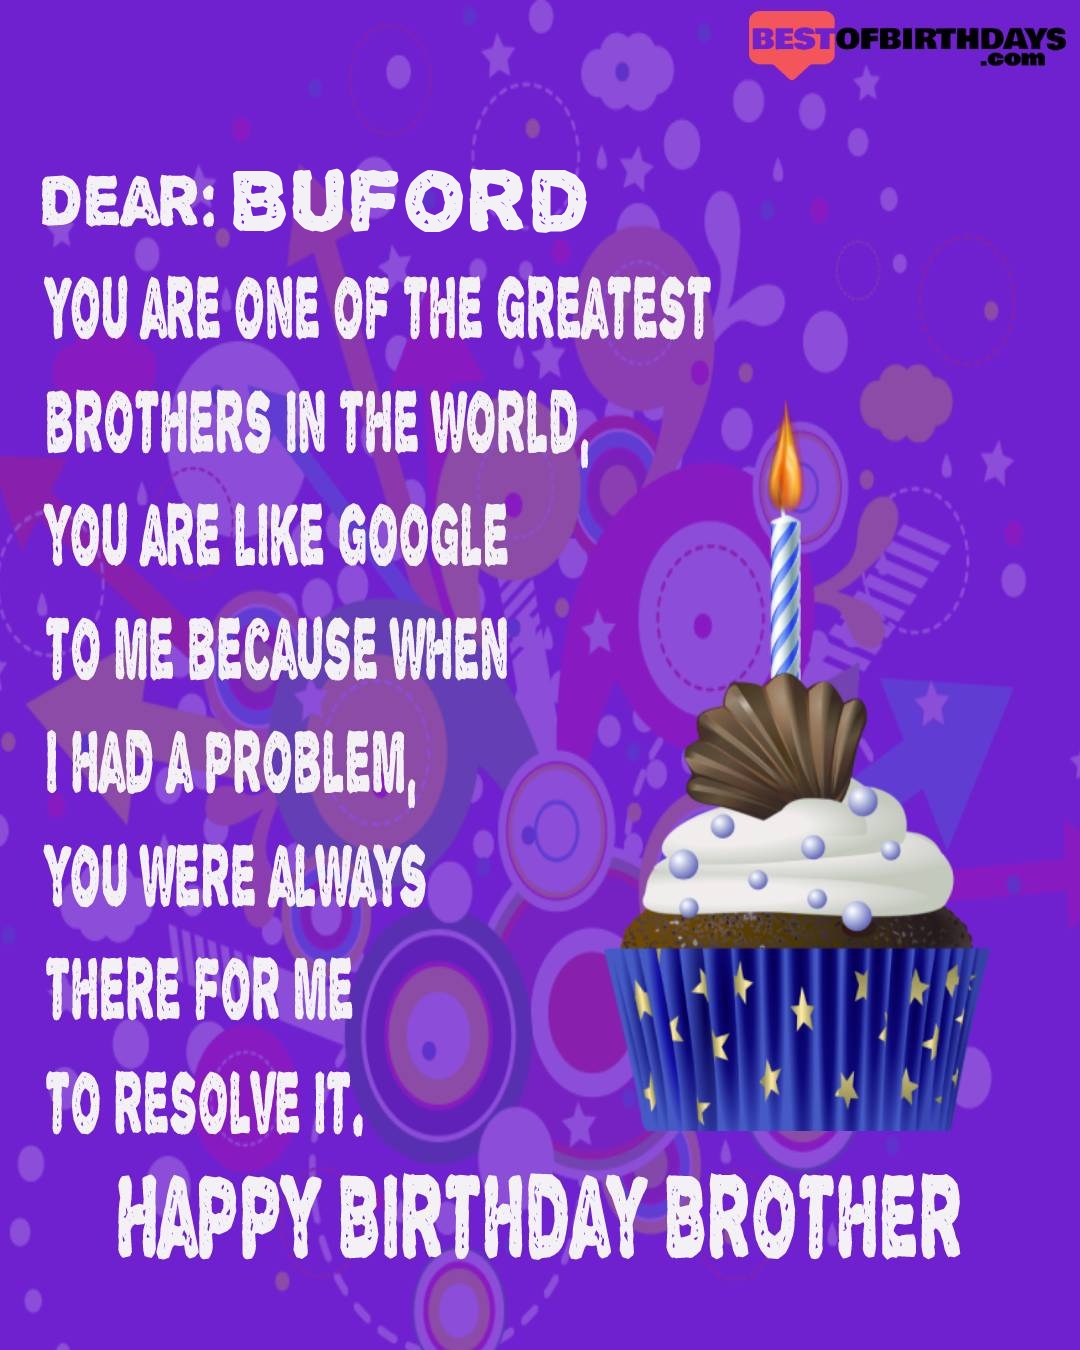 Happy birthday buford bhai brother bro